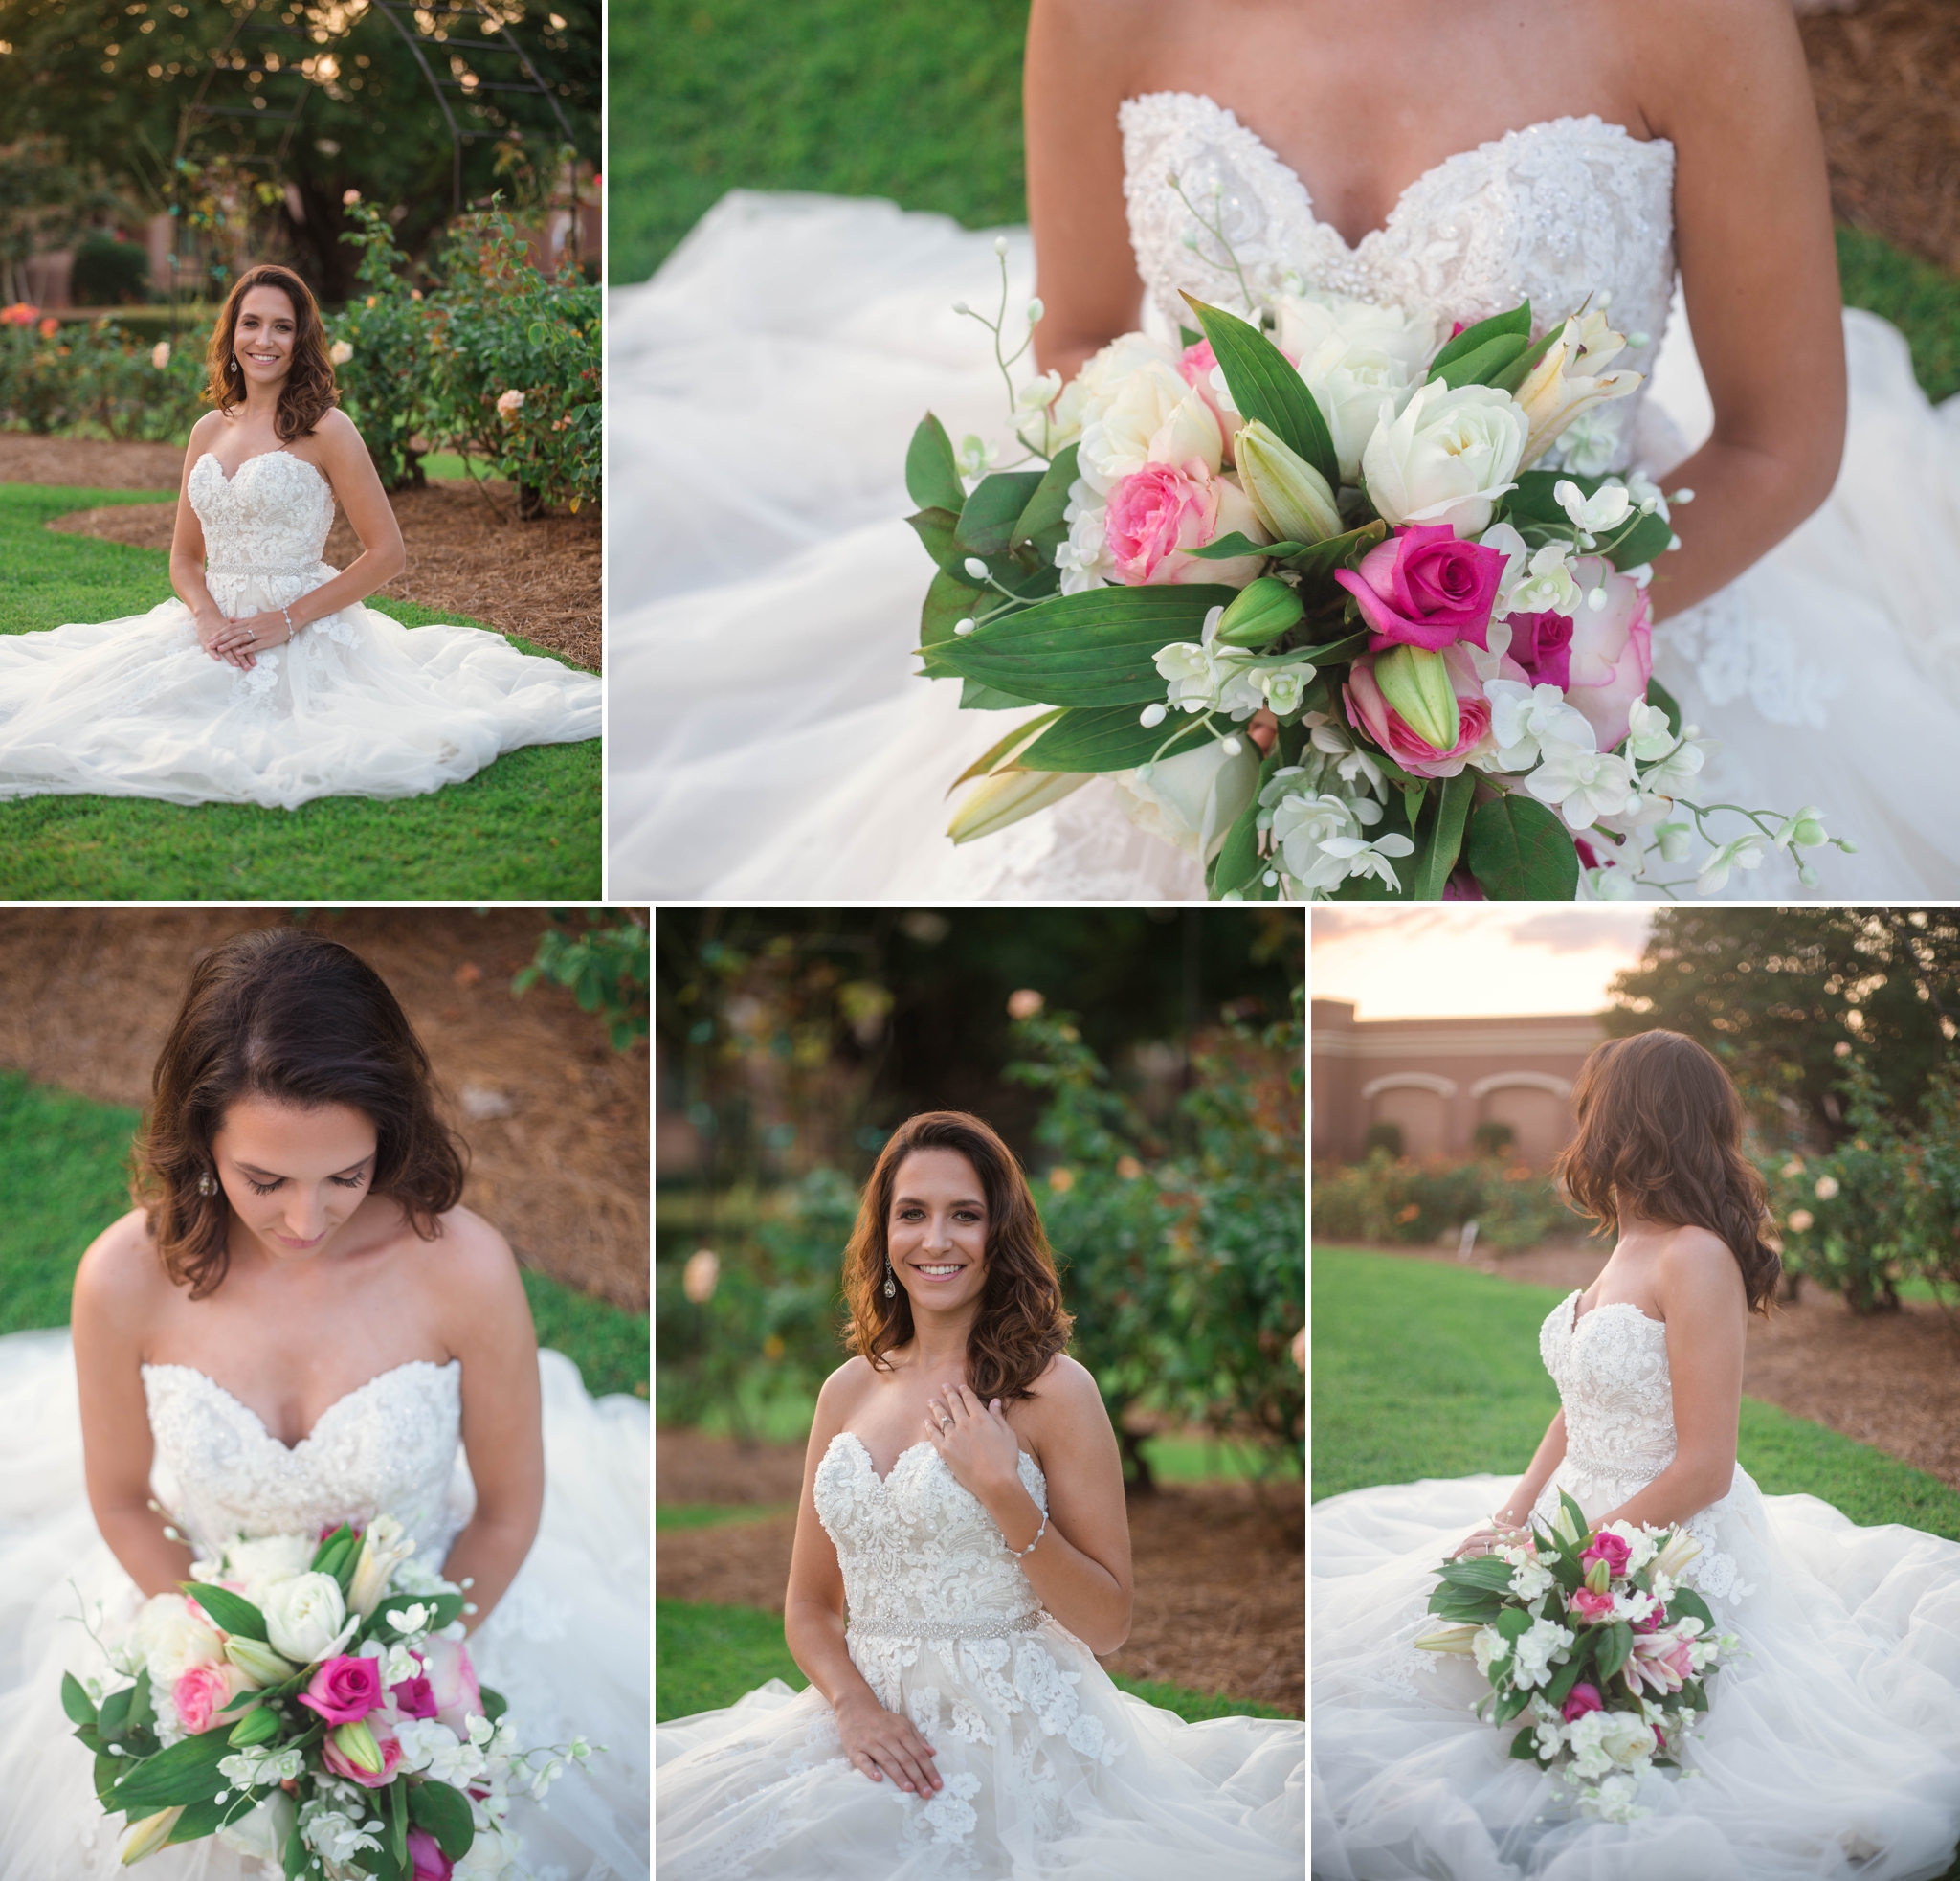 Morgan - Bridal Photography Session at the FTCC Rose Garden - Fayetteville North Carolina Wedding Photographer